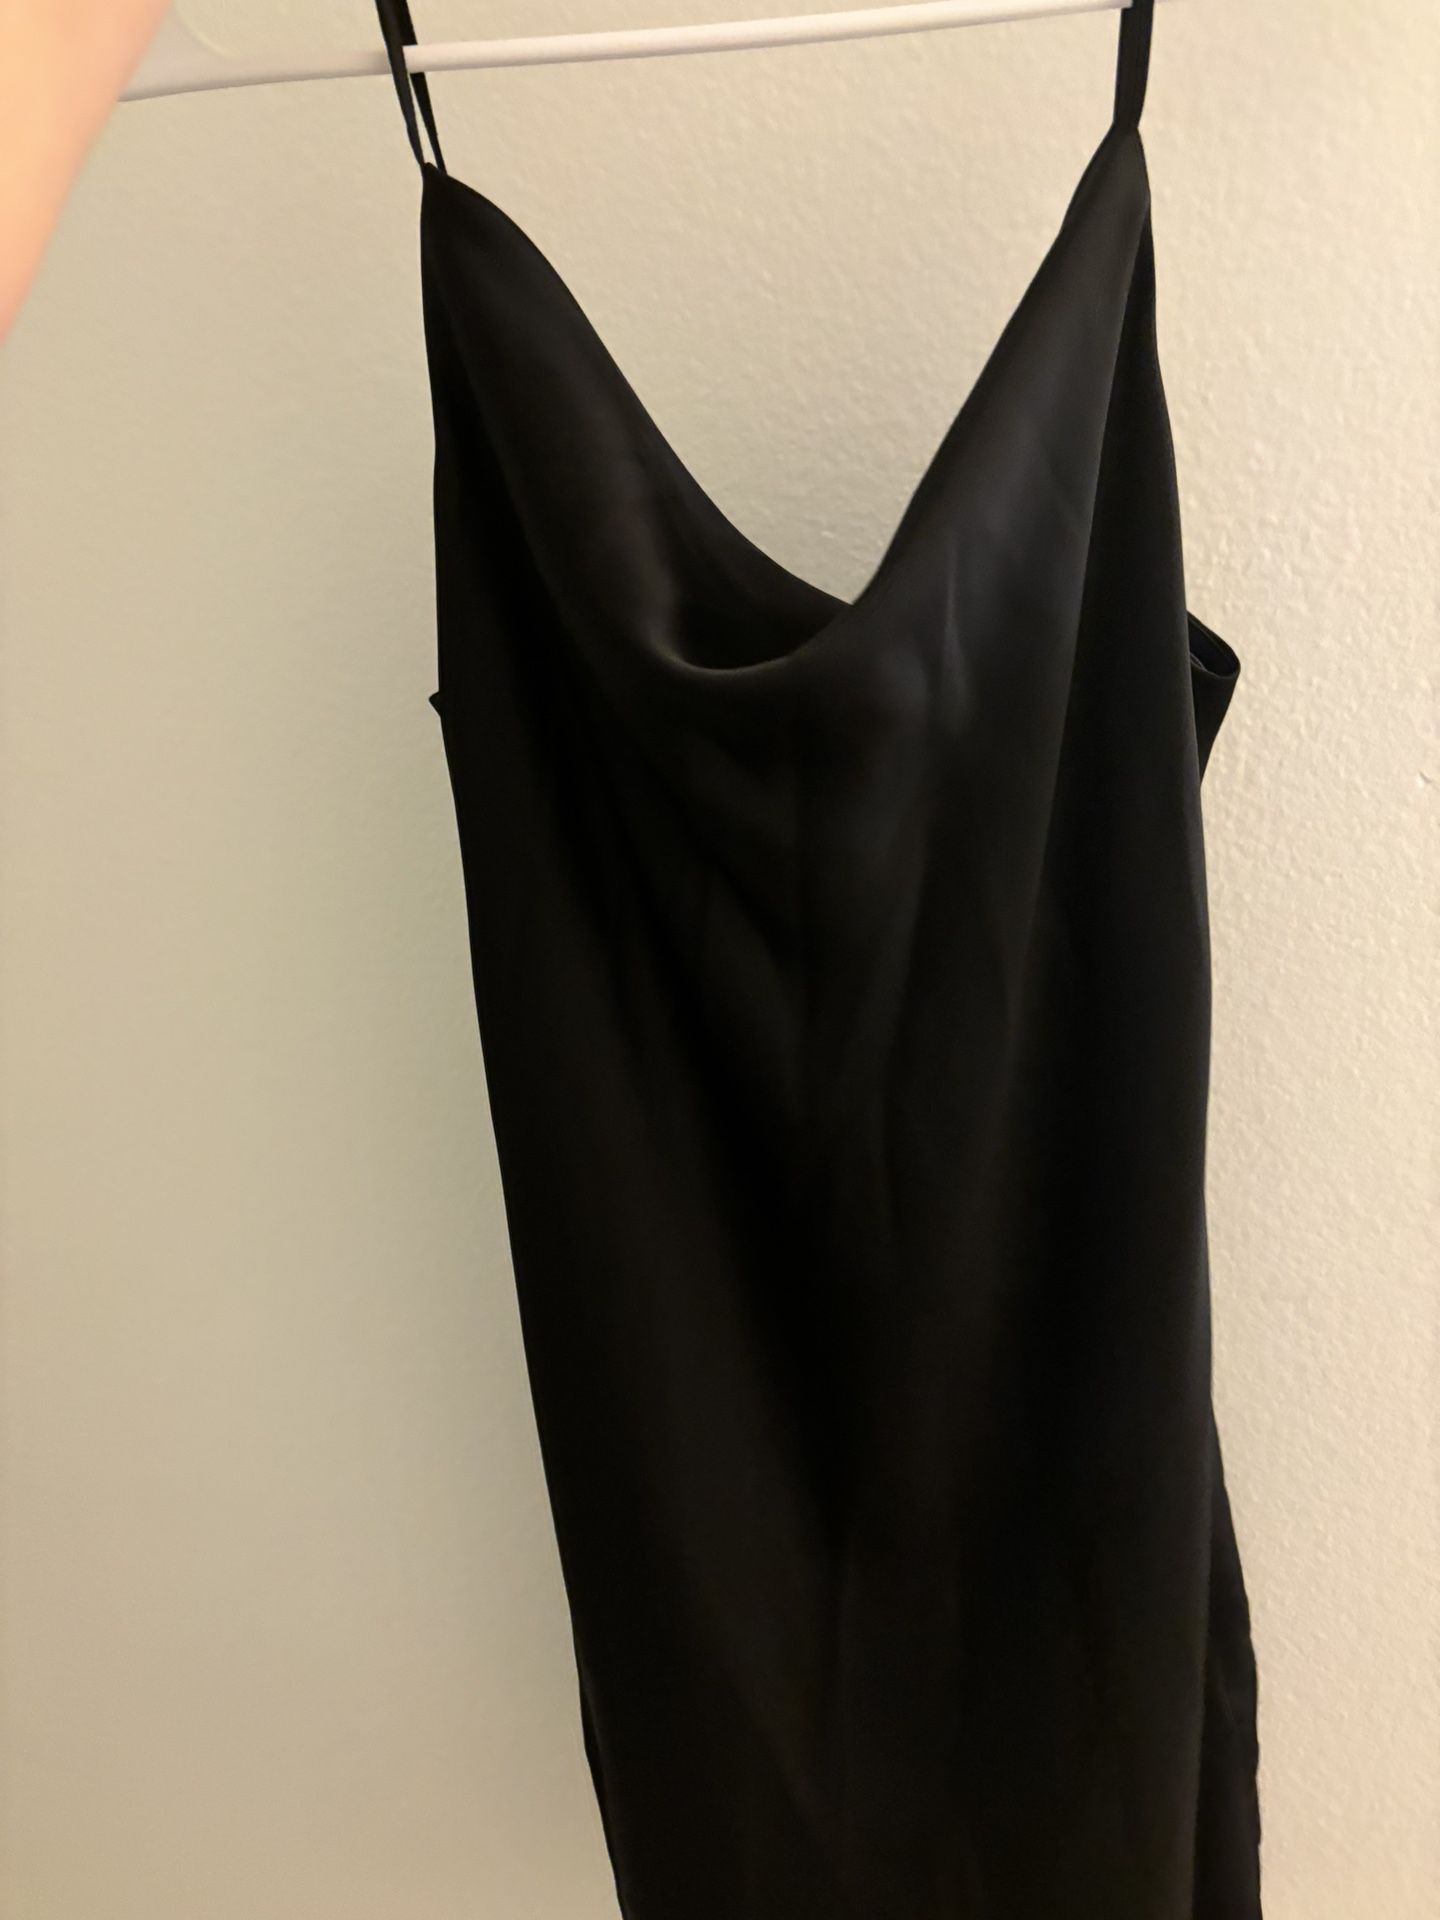 Urban Outfitters Black Mini Dress